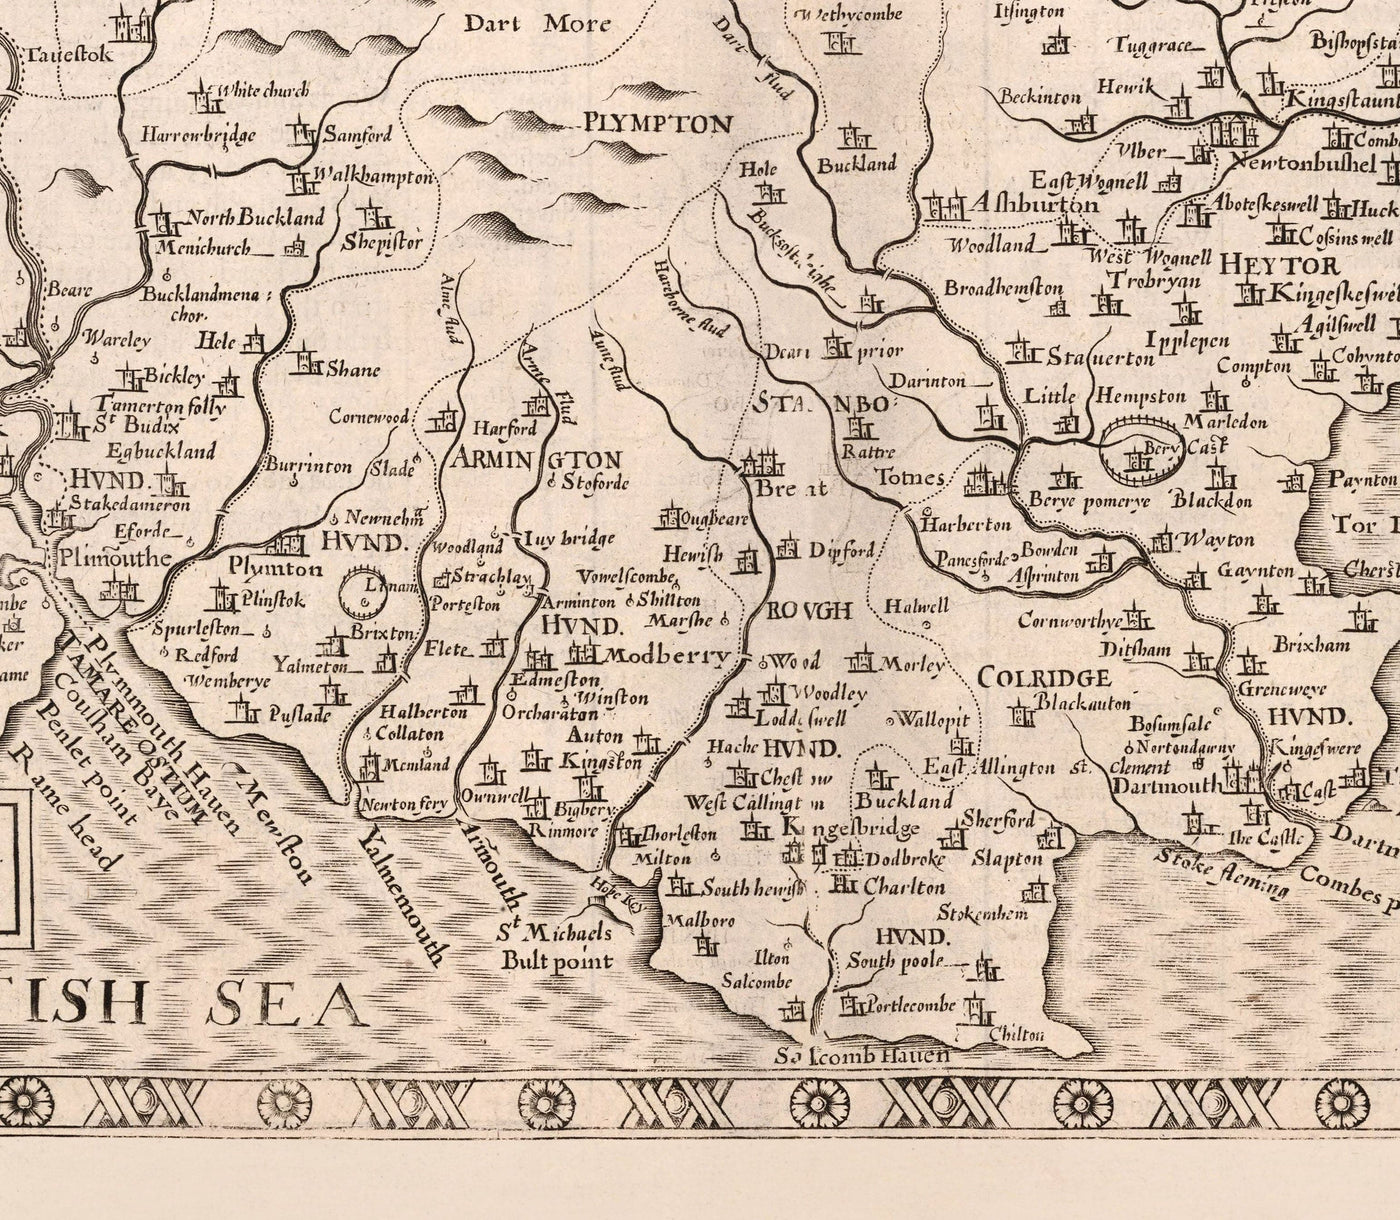 Ancienne Carte de Devon, 1611 par John Speed ​​- Plymouth, Exeter, Torquay, Paignton, Exmouth, Barnstaples